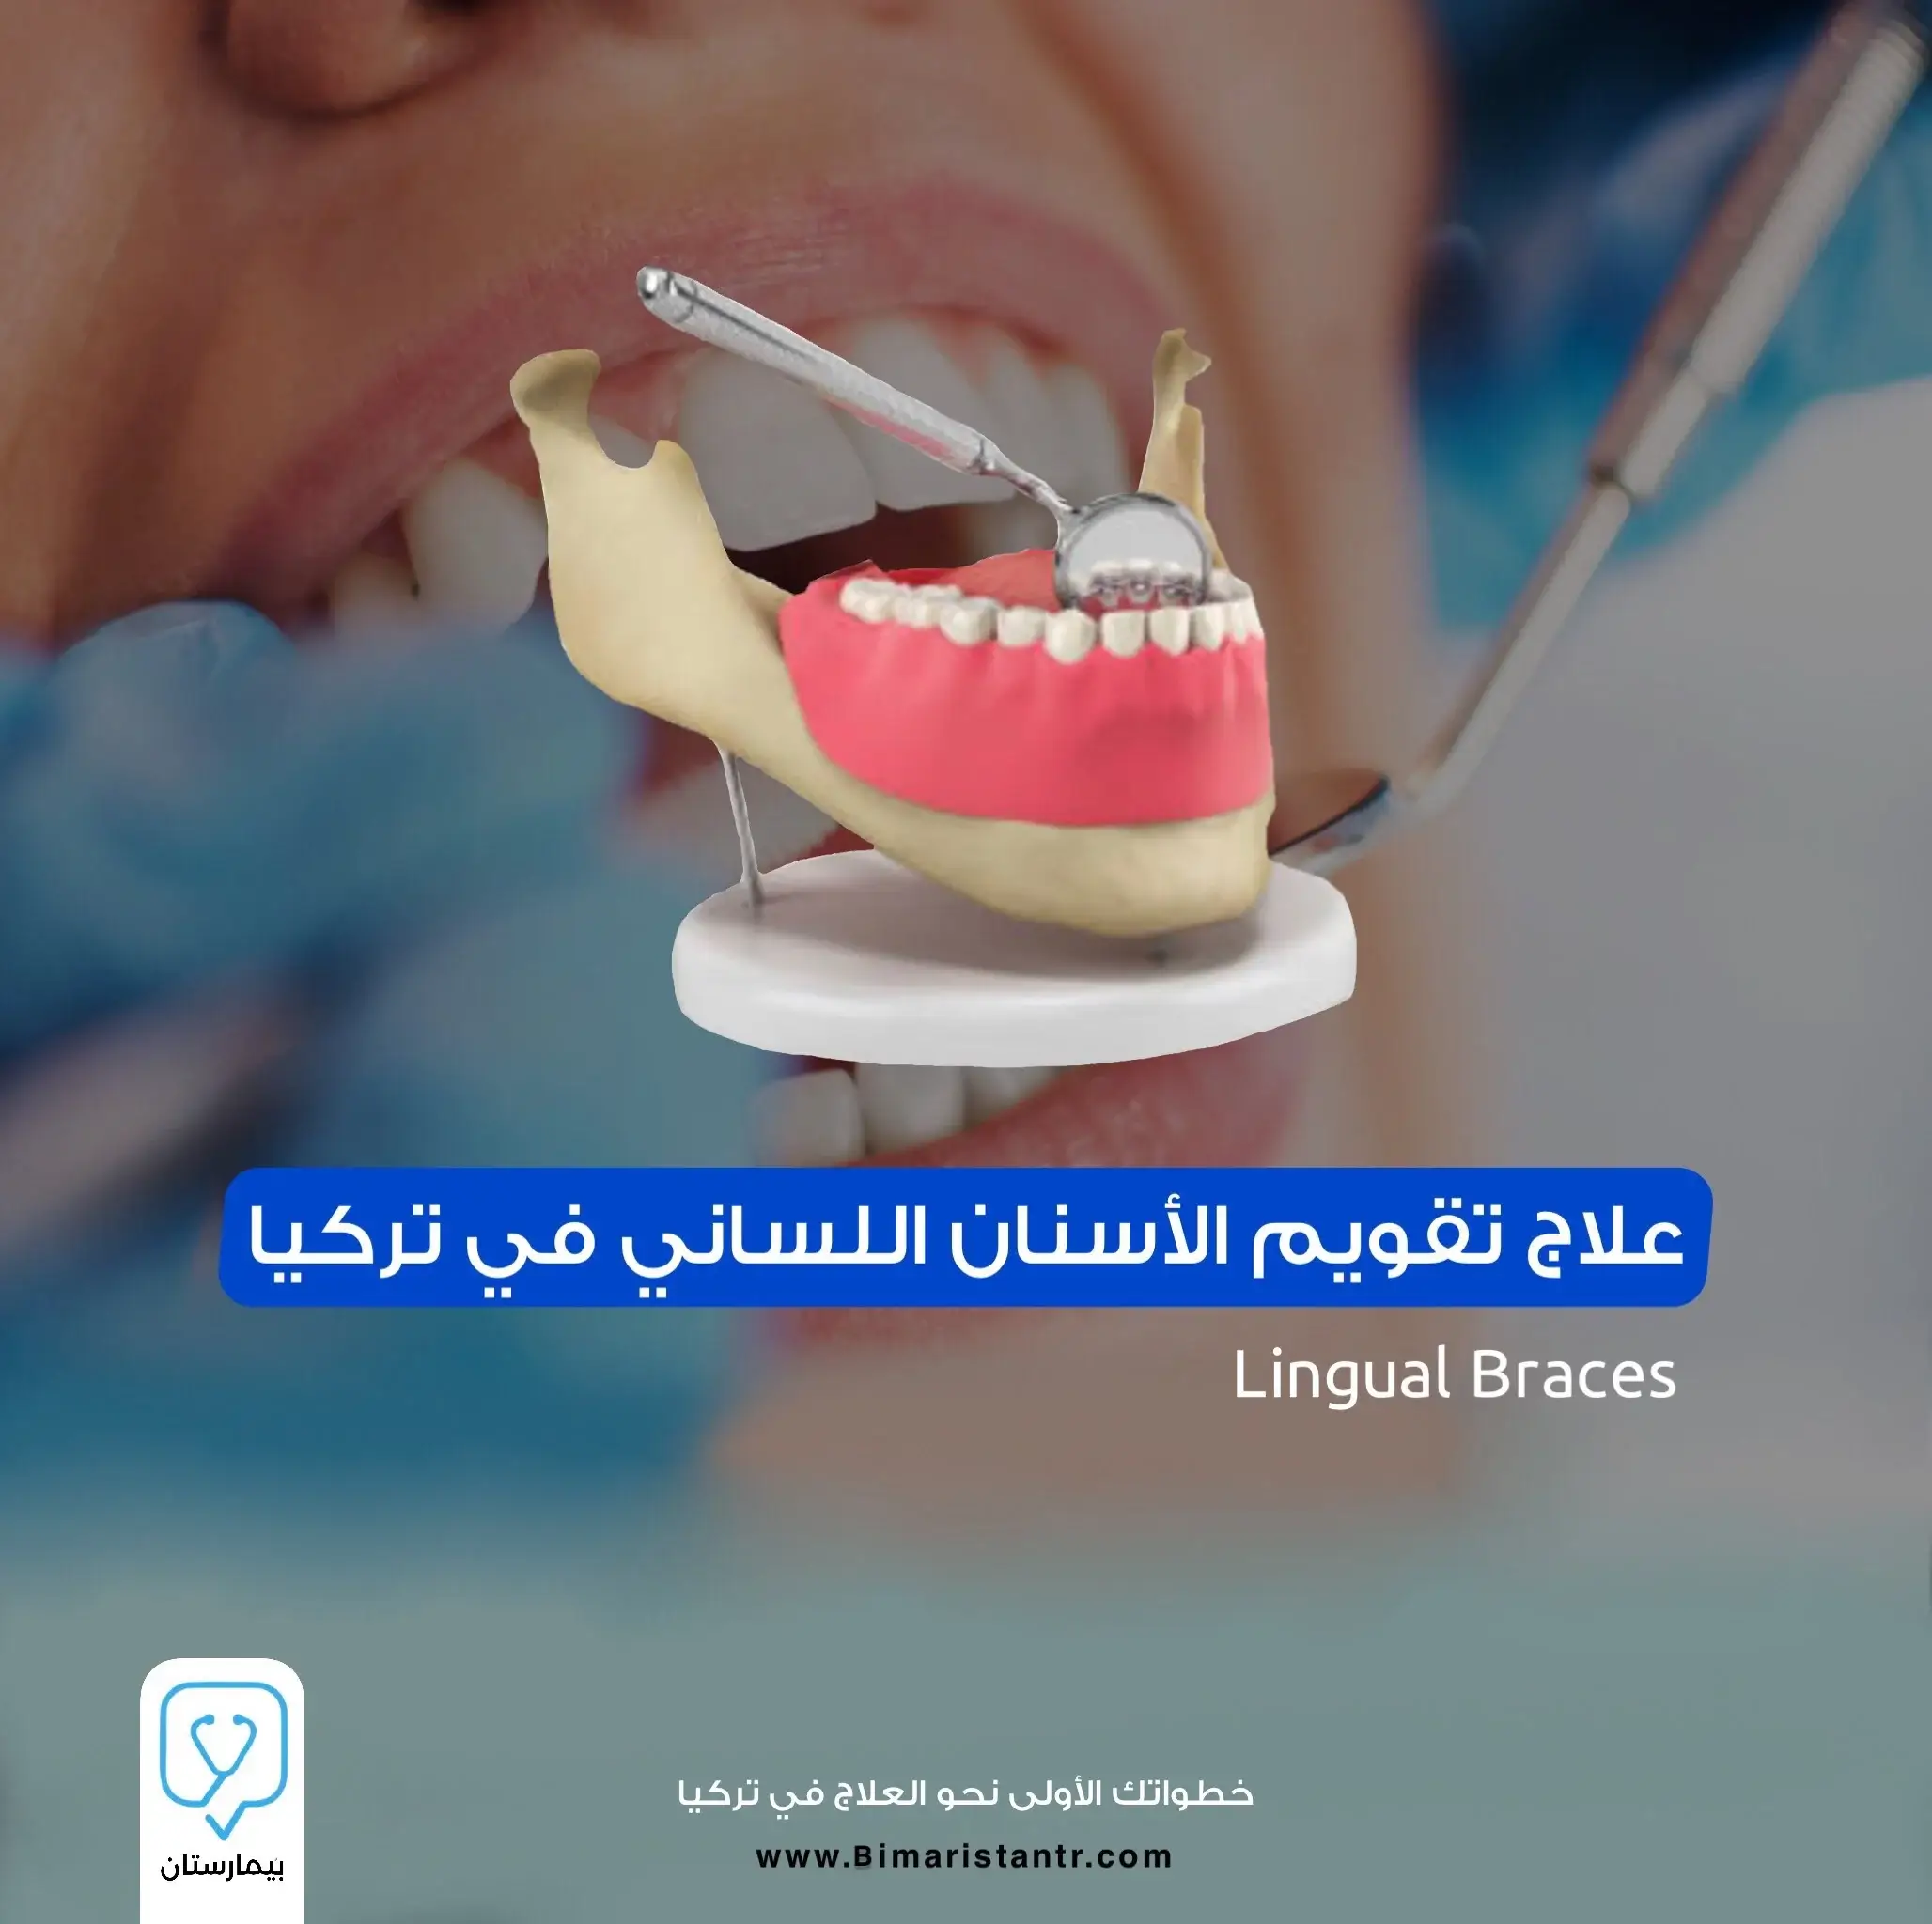 Lingual orthodontic treatment in Turkey